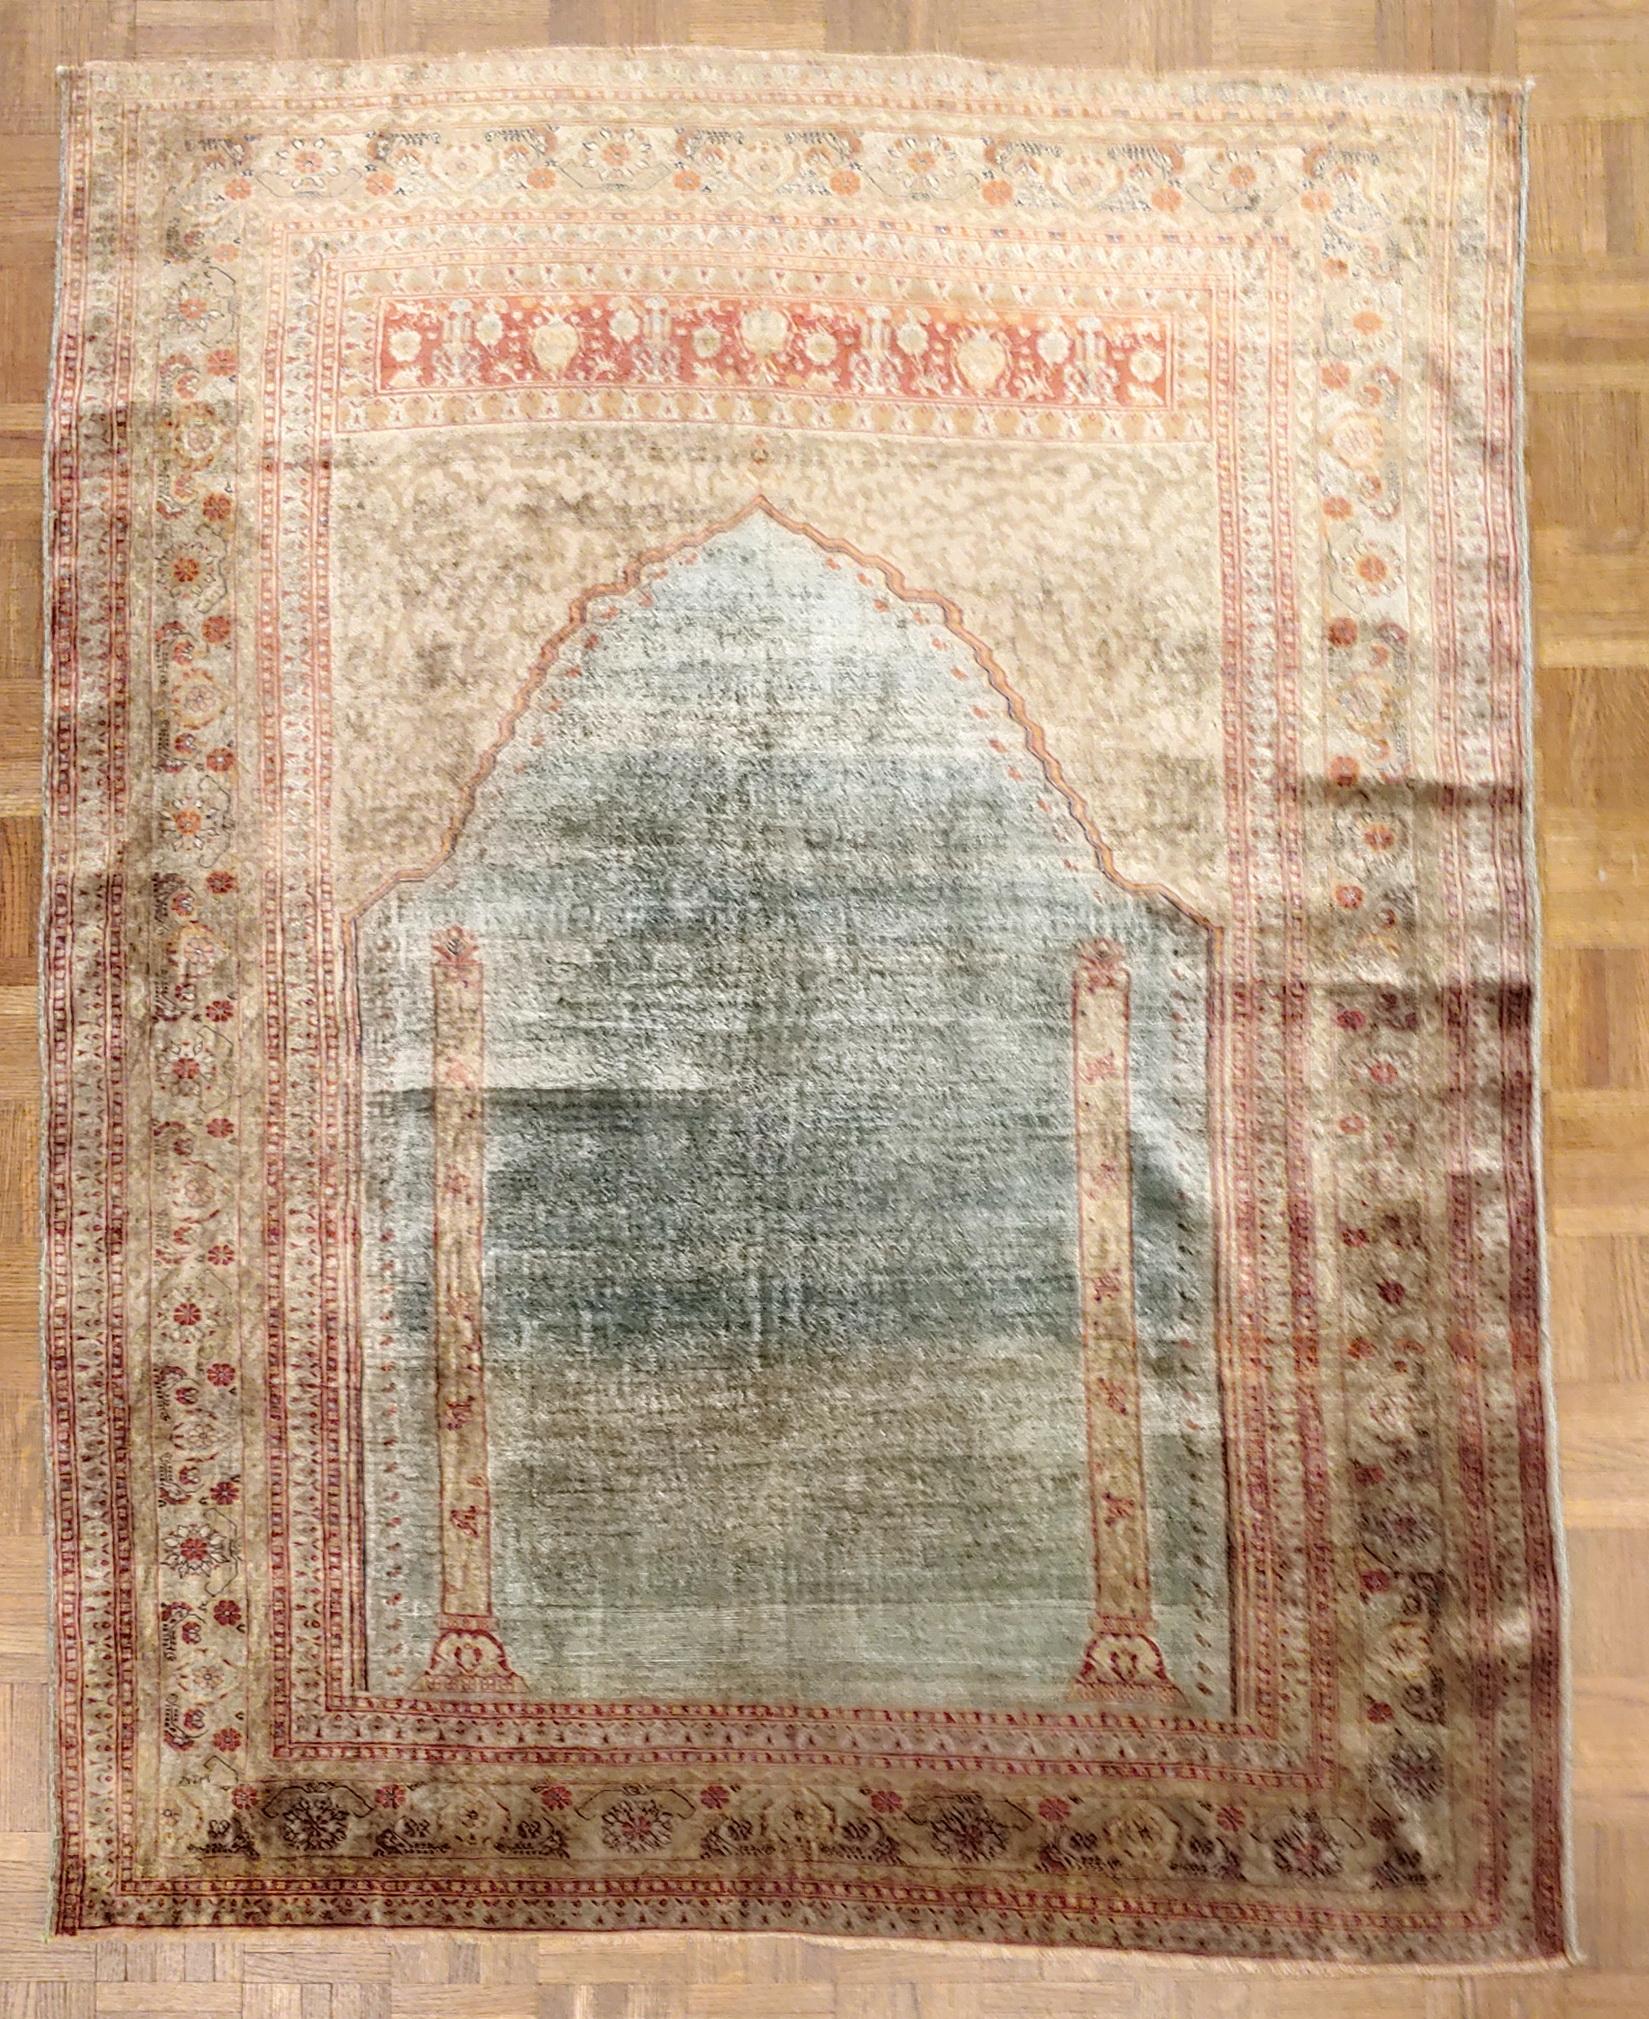 Woven Antique Turkish Silk Ghiordes Rug Prayer Design, Aqua Field with Terracotta